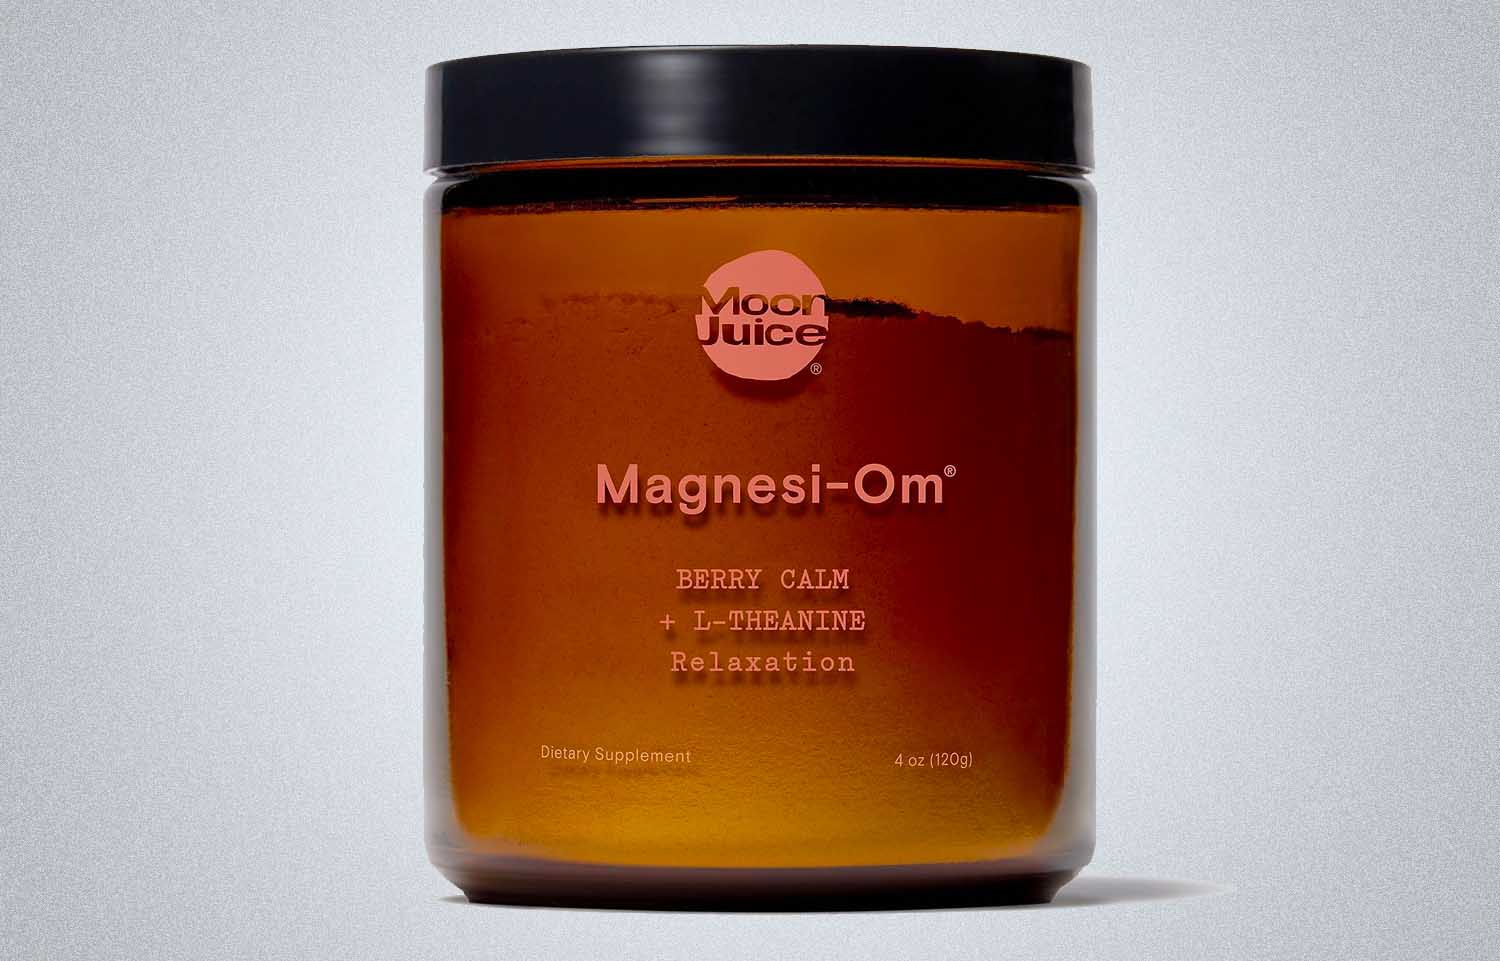 Magnesi-Om by Moon Juice